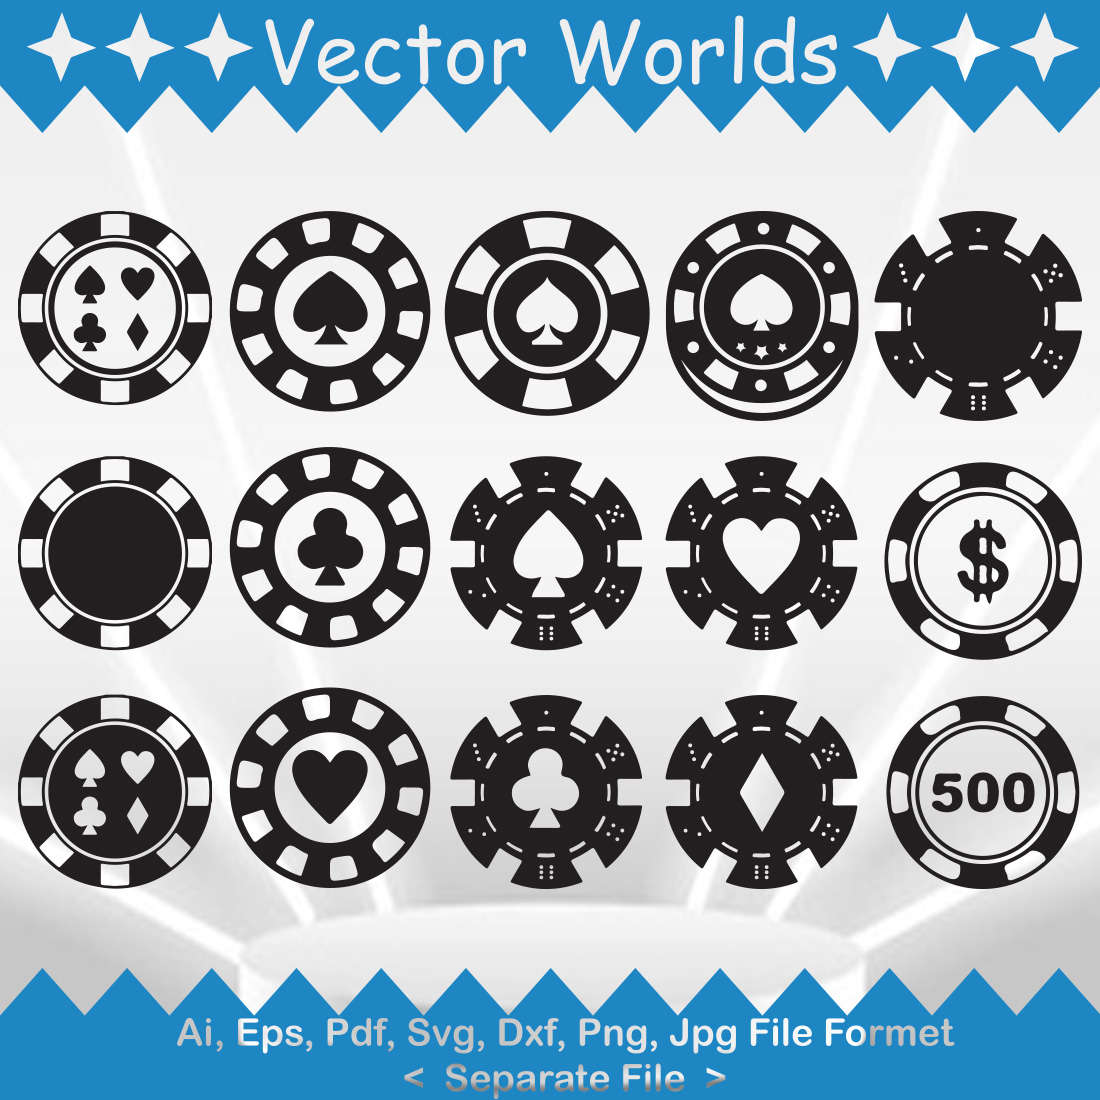 Poker Chip SVG Vector Design cover image.